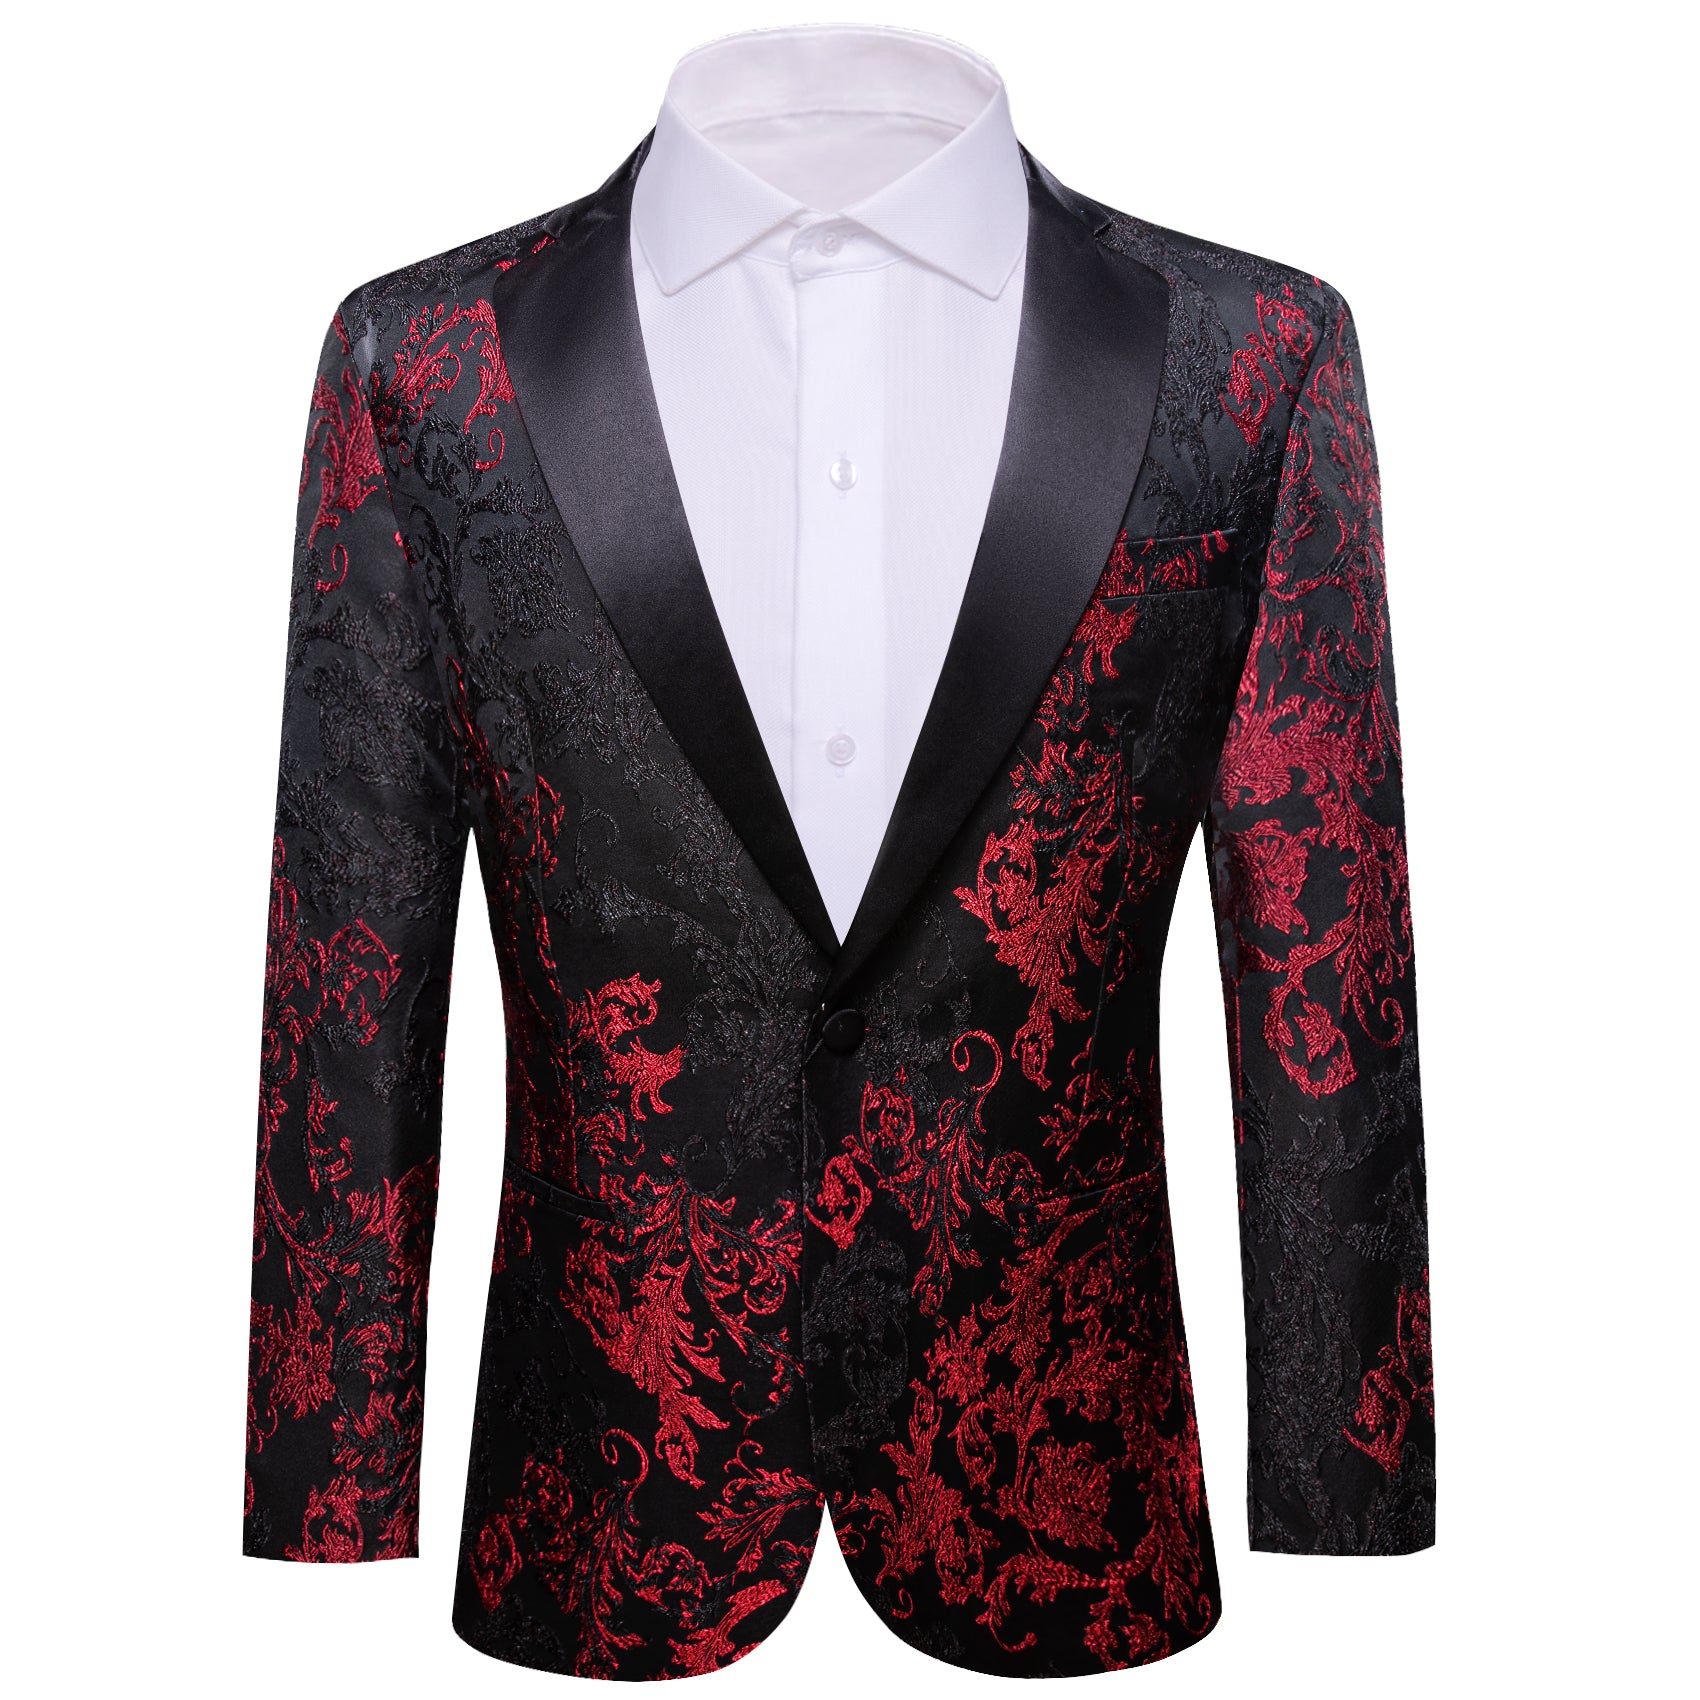 Barry.wang Notched Collar Suit Men's Red Black Paisley Suit Jacket